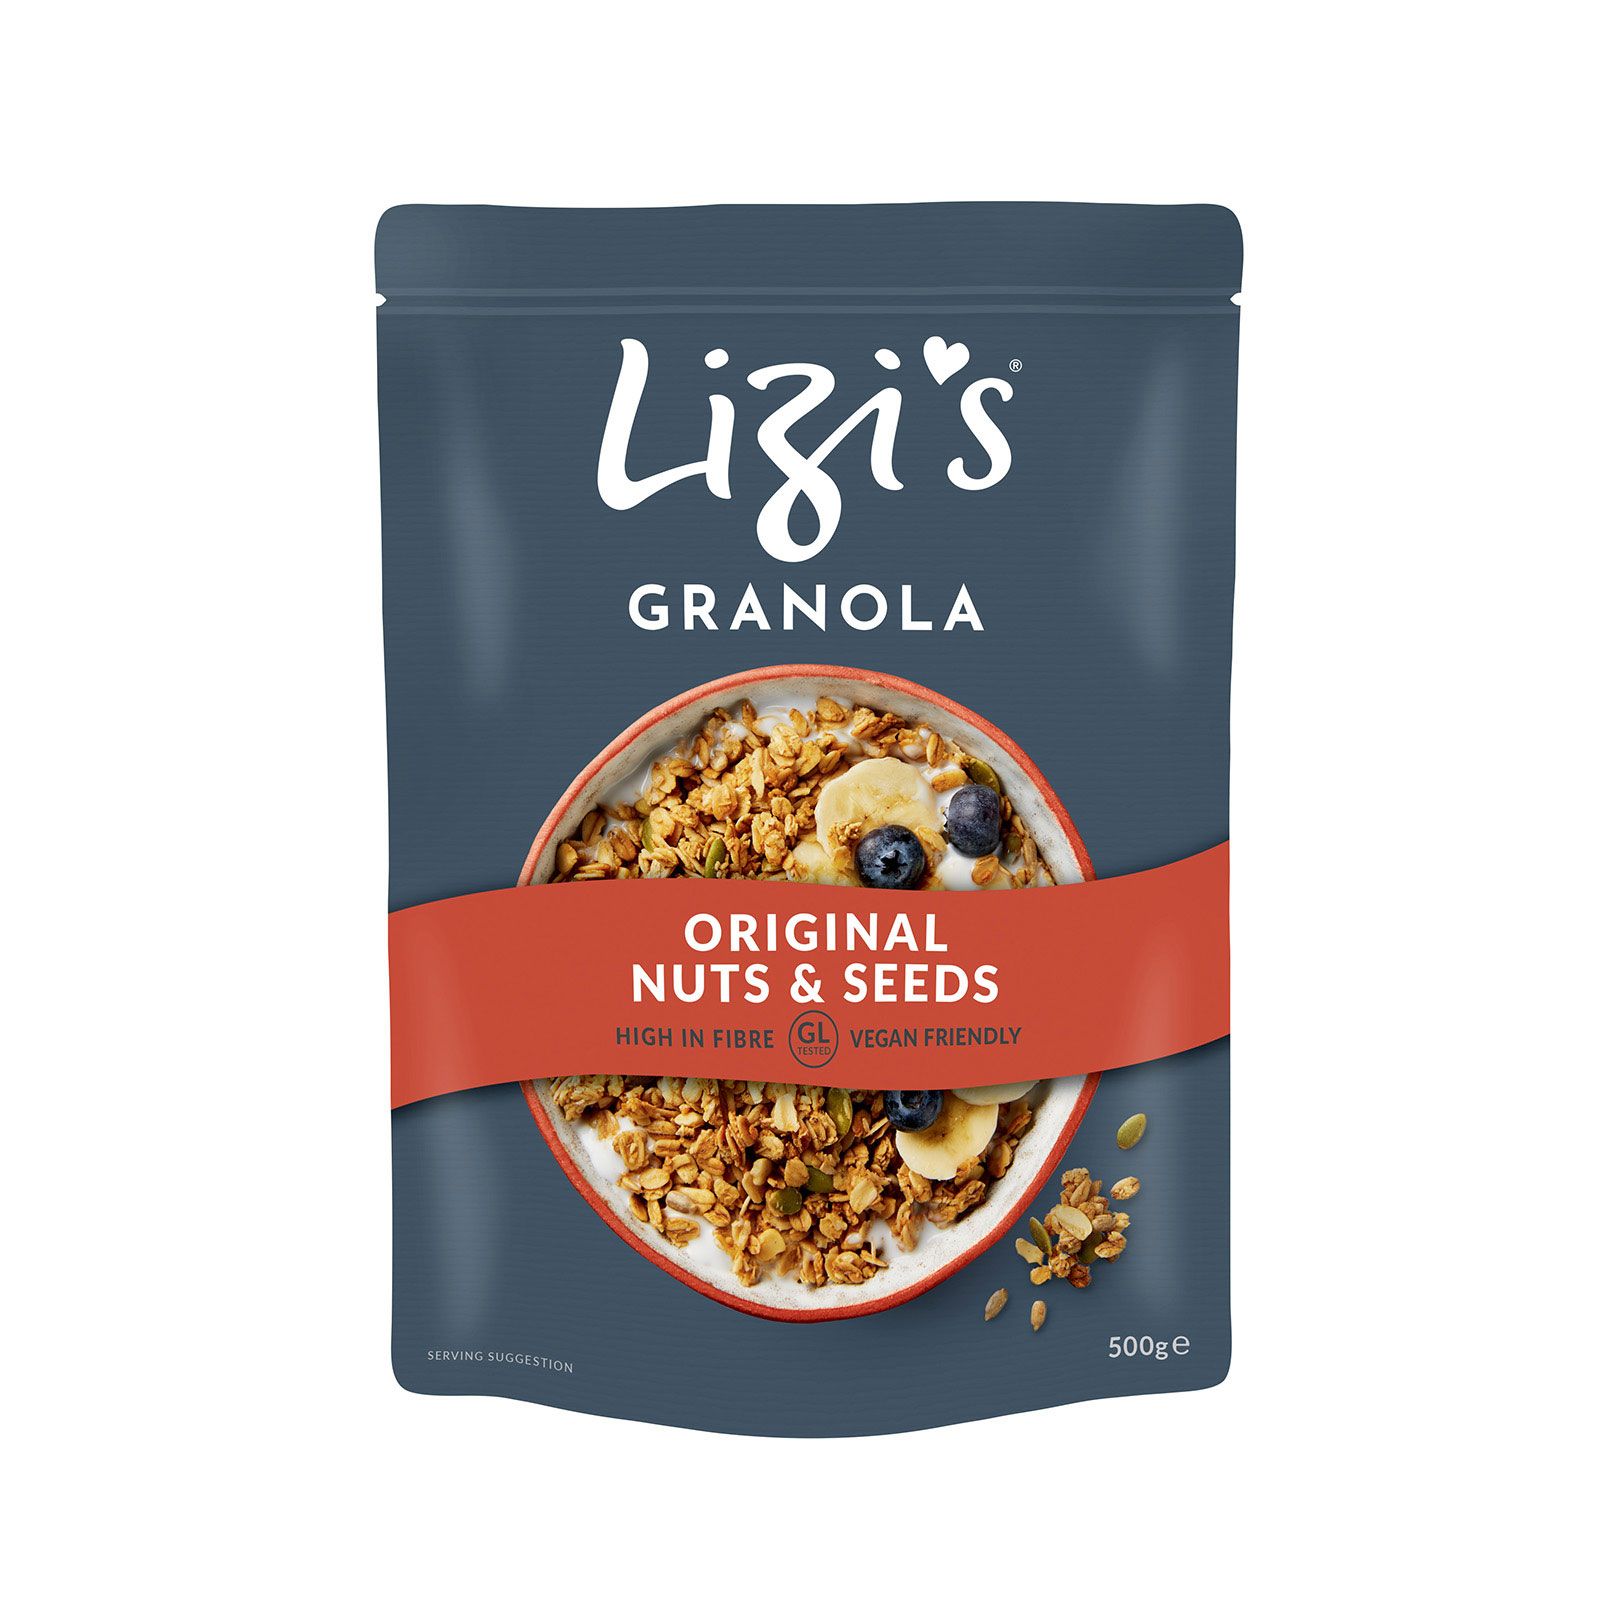 Original Nuts and Seeds Granola - Image